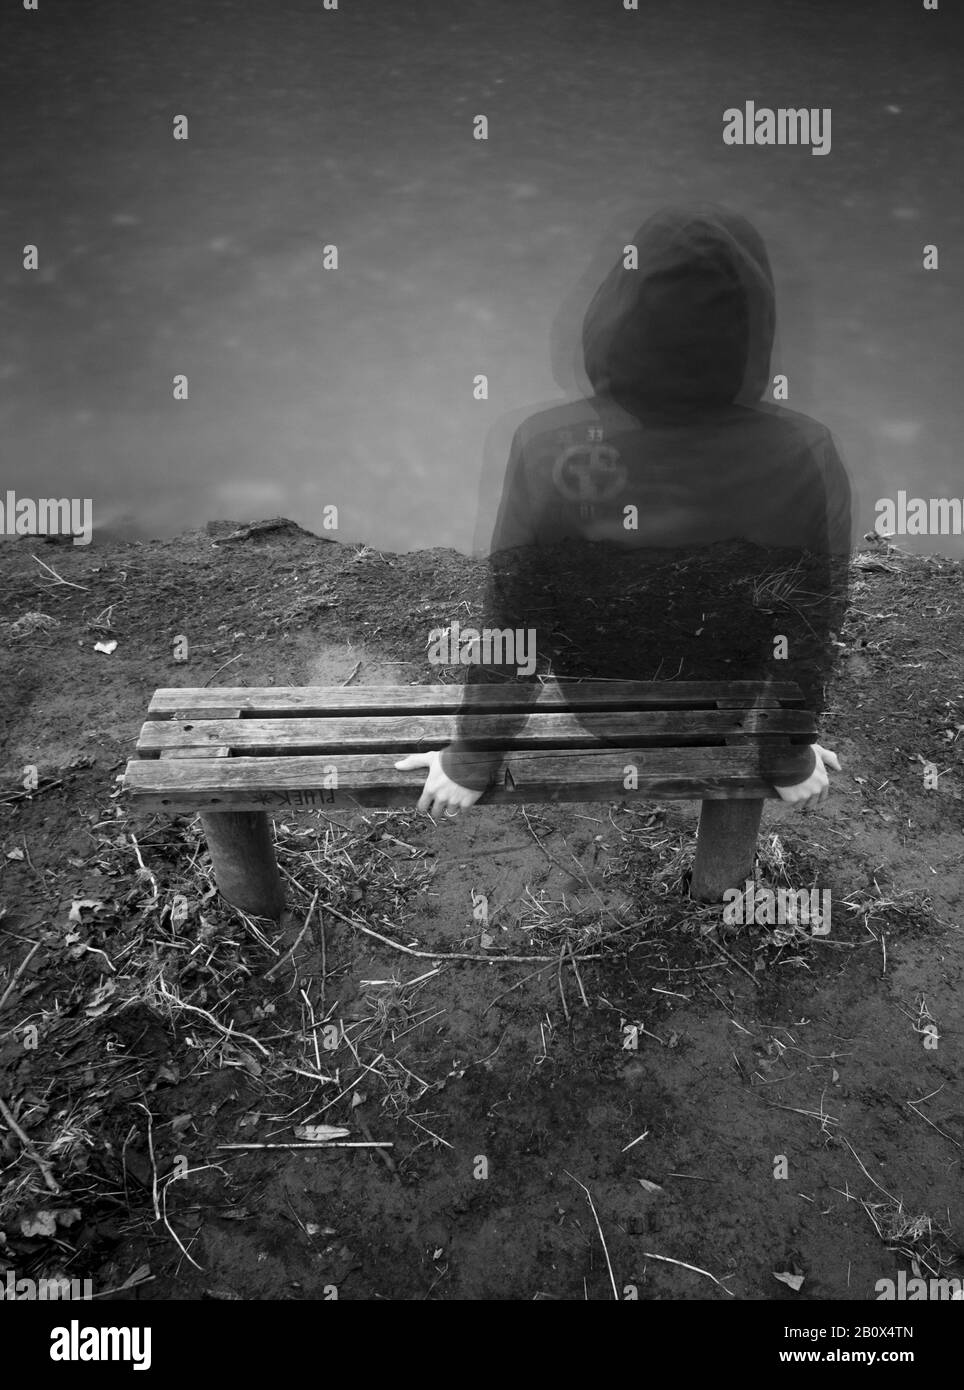 Uomo seduto da solo su una panchina, Foto Stock